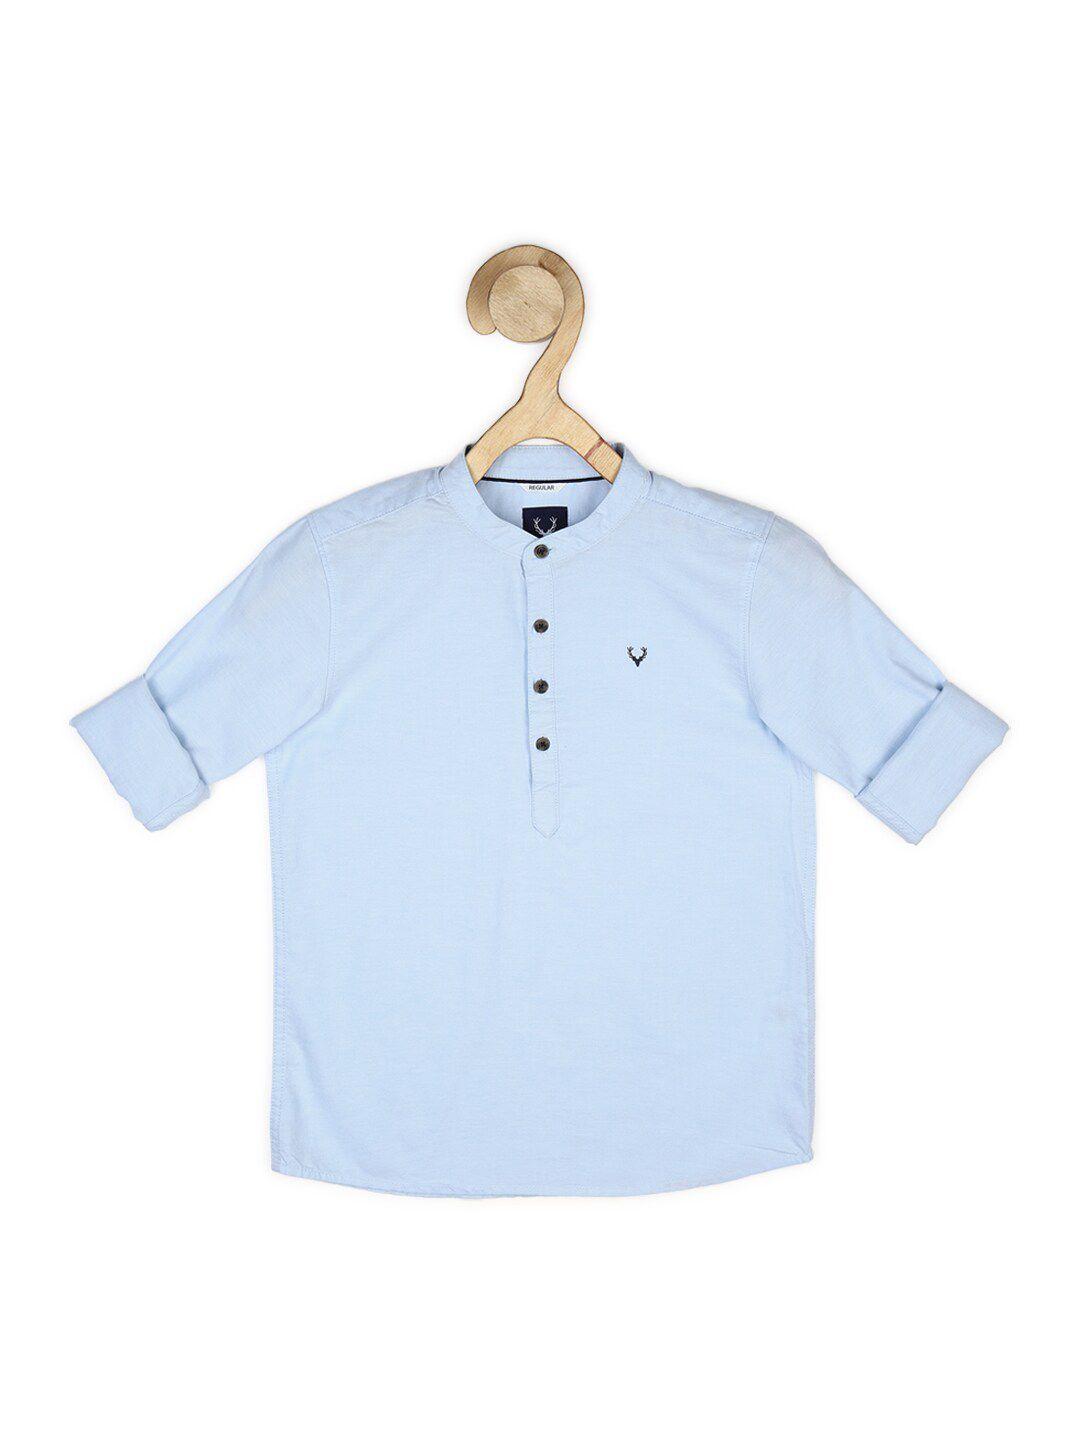 allen solly junior boys blue regular fit cotton casual shirt